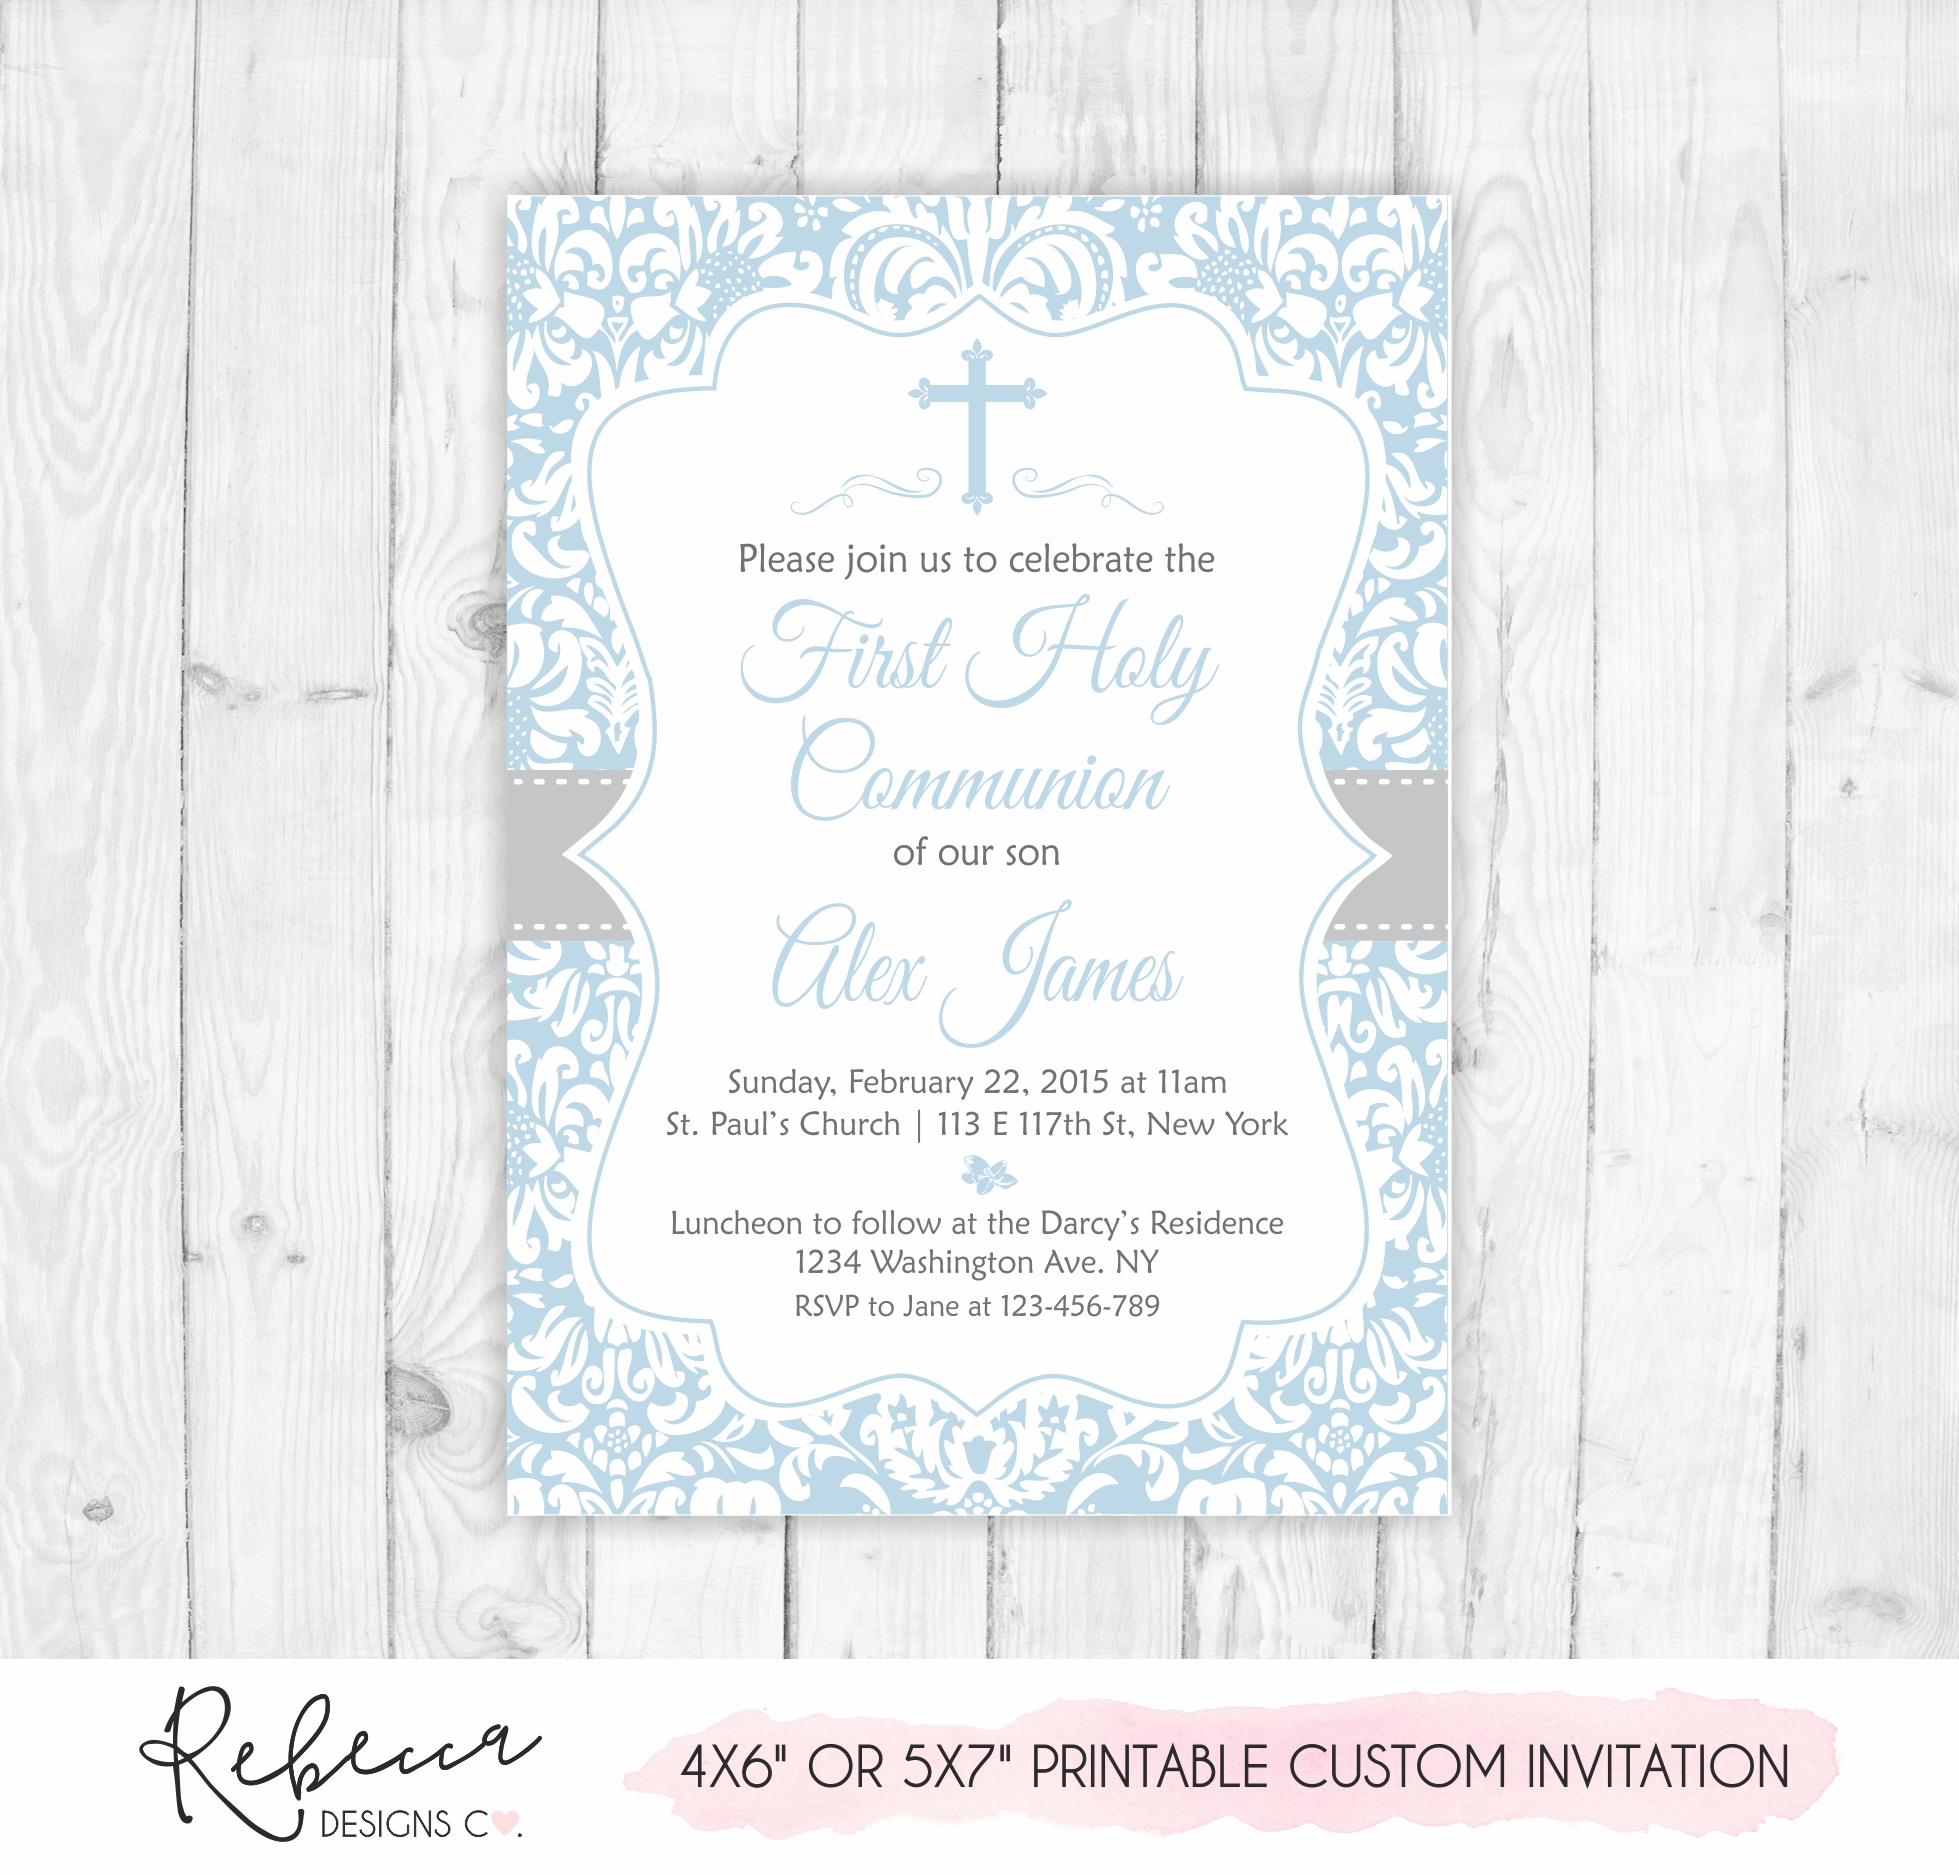 Boy first communion invitation • Printable custom design Rebecca